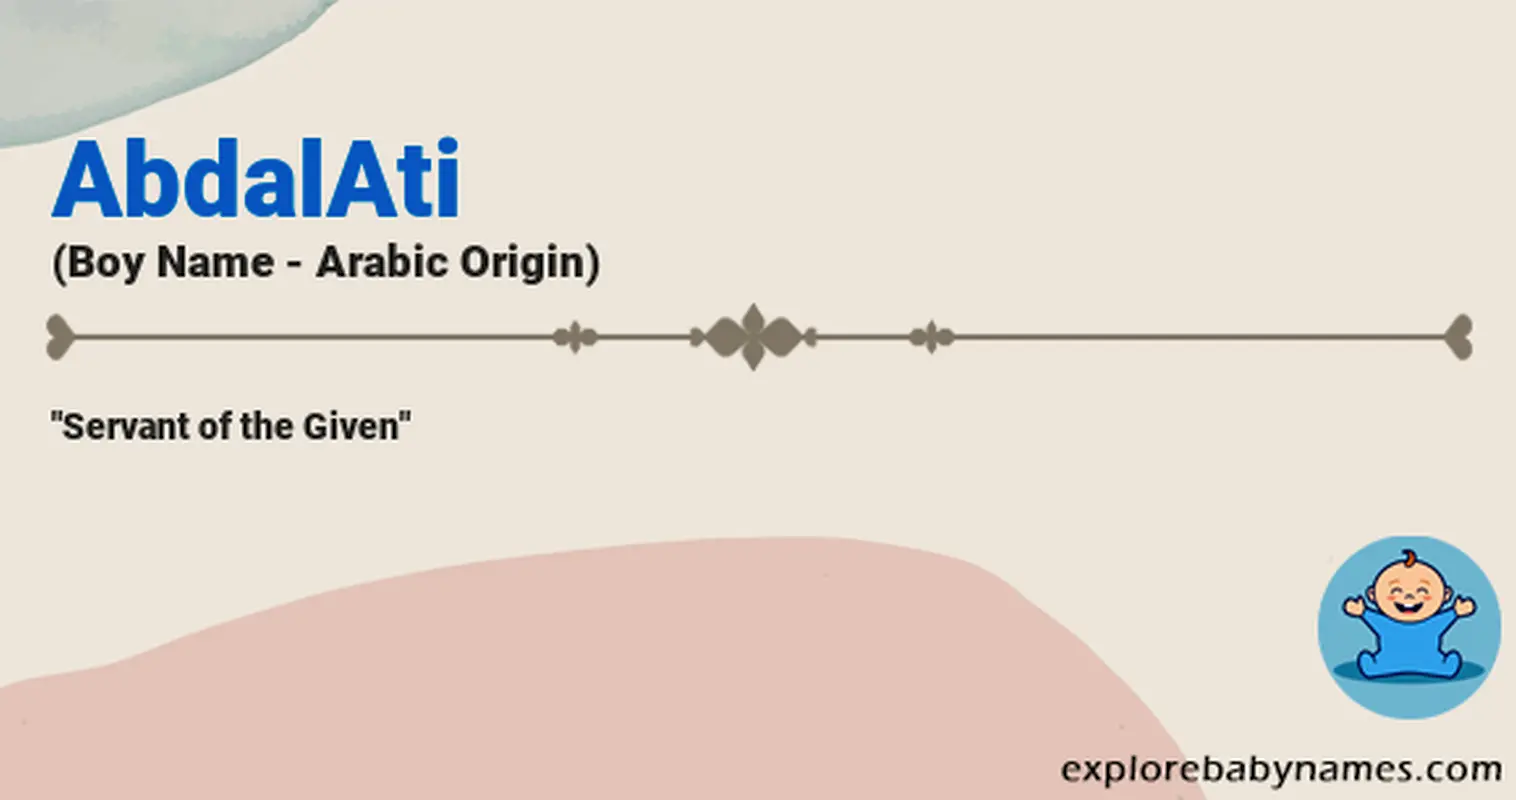 Meaning of AbdalAti